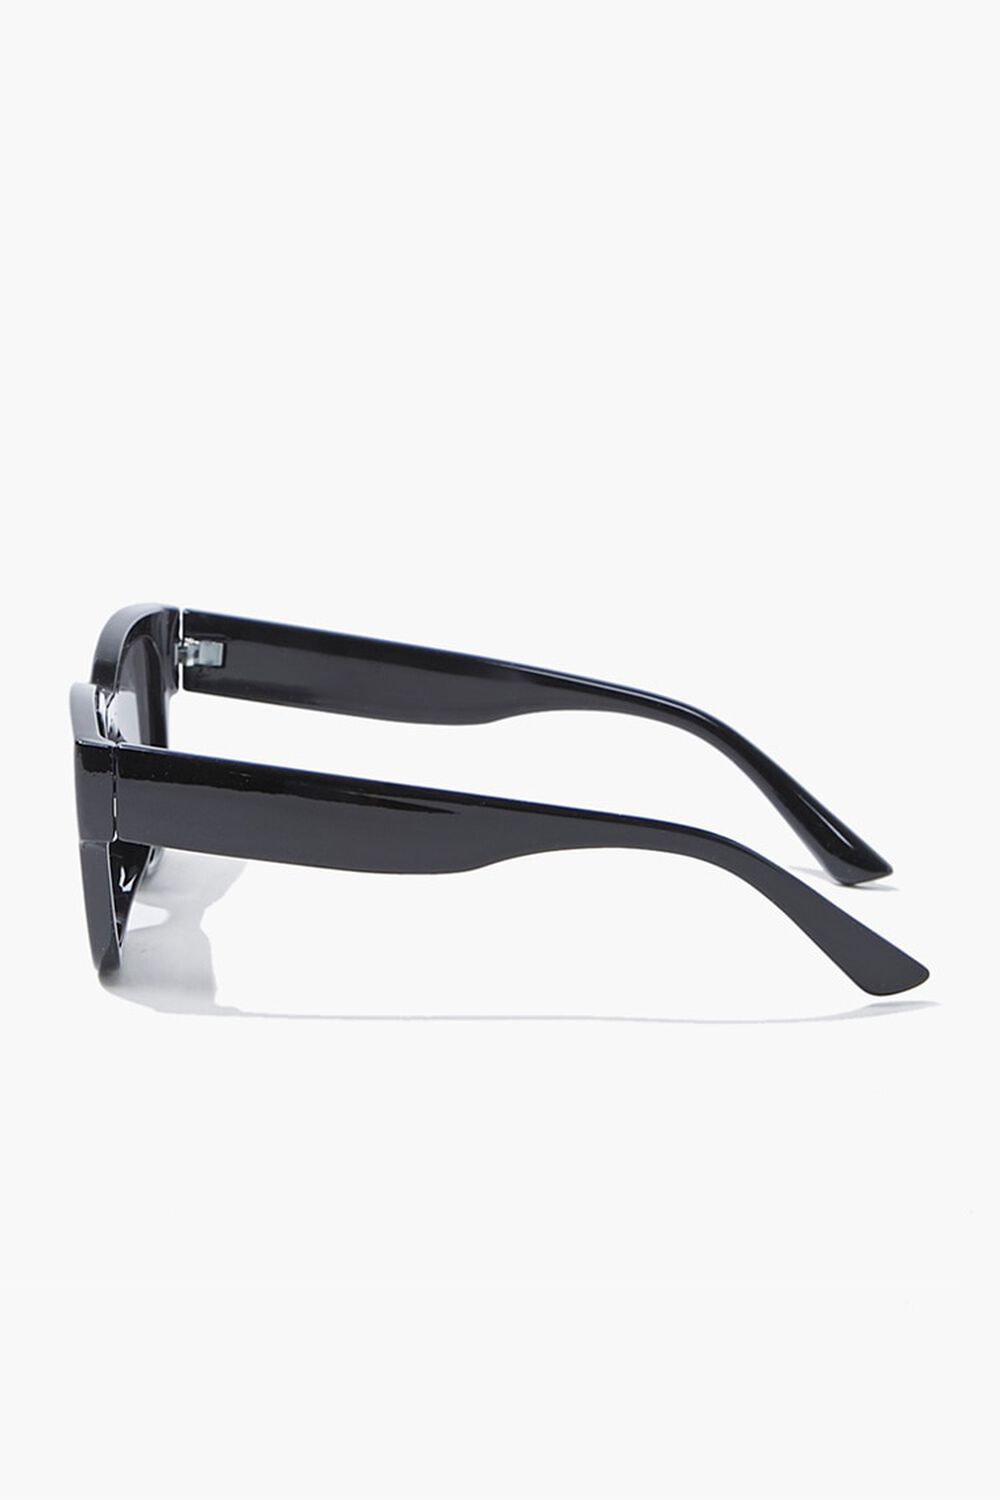 BLACK/BLACK Square Tinted Sunglasses, image 2